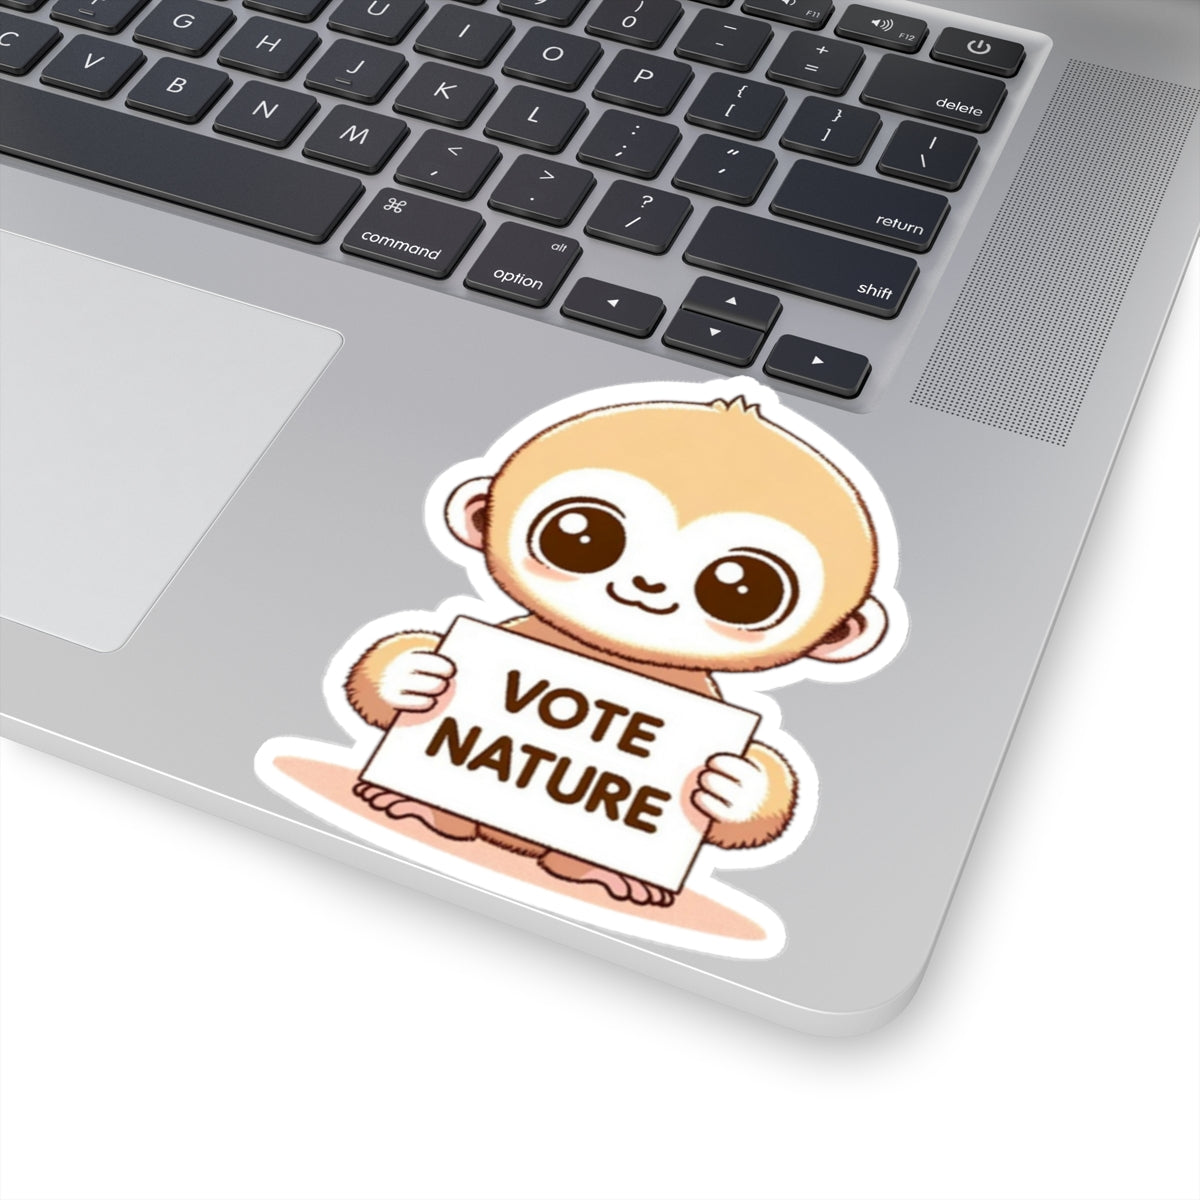 Inspirational Cute Gibbon Ape Statement vinyl Sticker: Vote Nature! for laptop, kindle, phone, ipad, instrument case, notebook, mood board